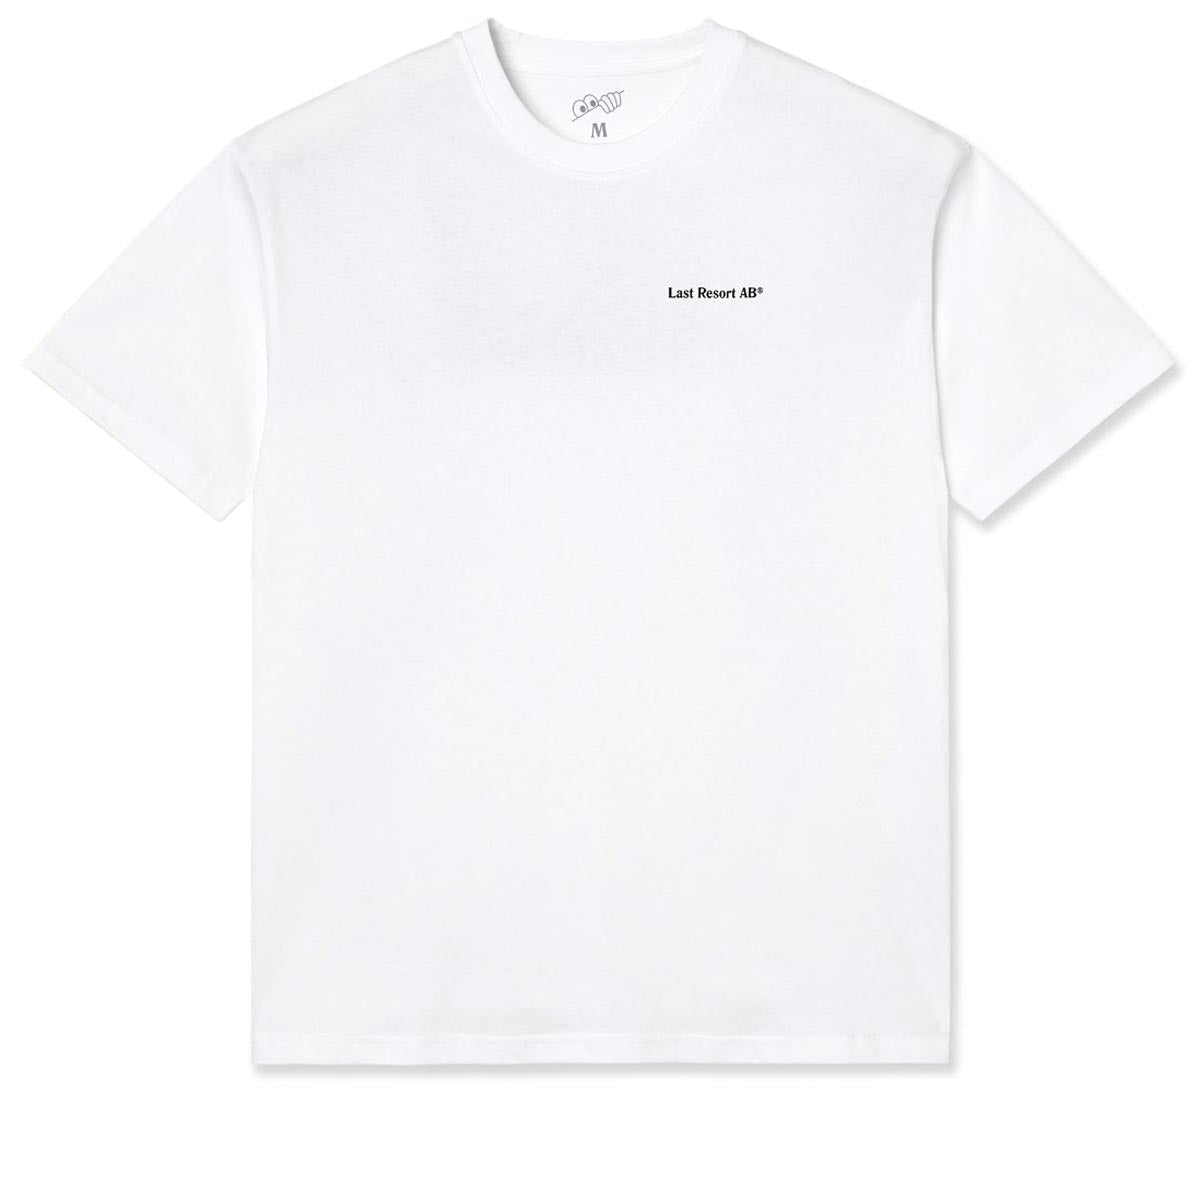 Last Resort AB 5050 T-Shirt - White image 2